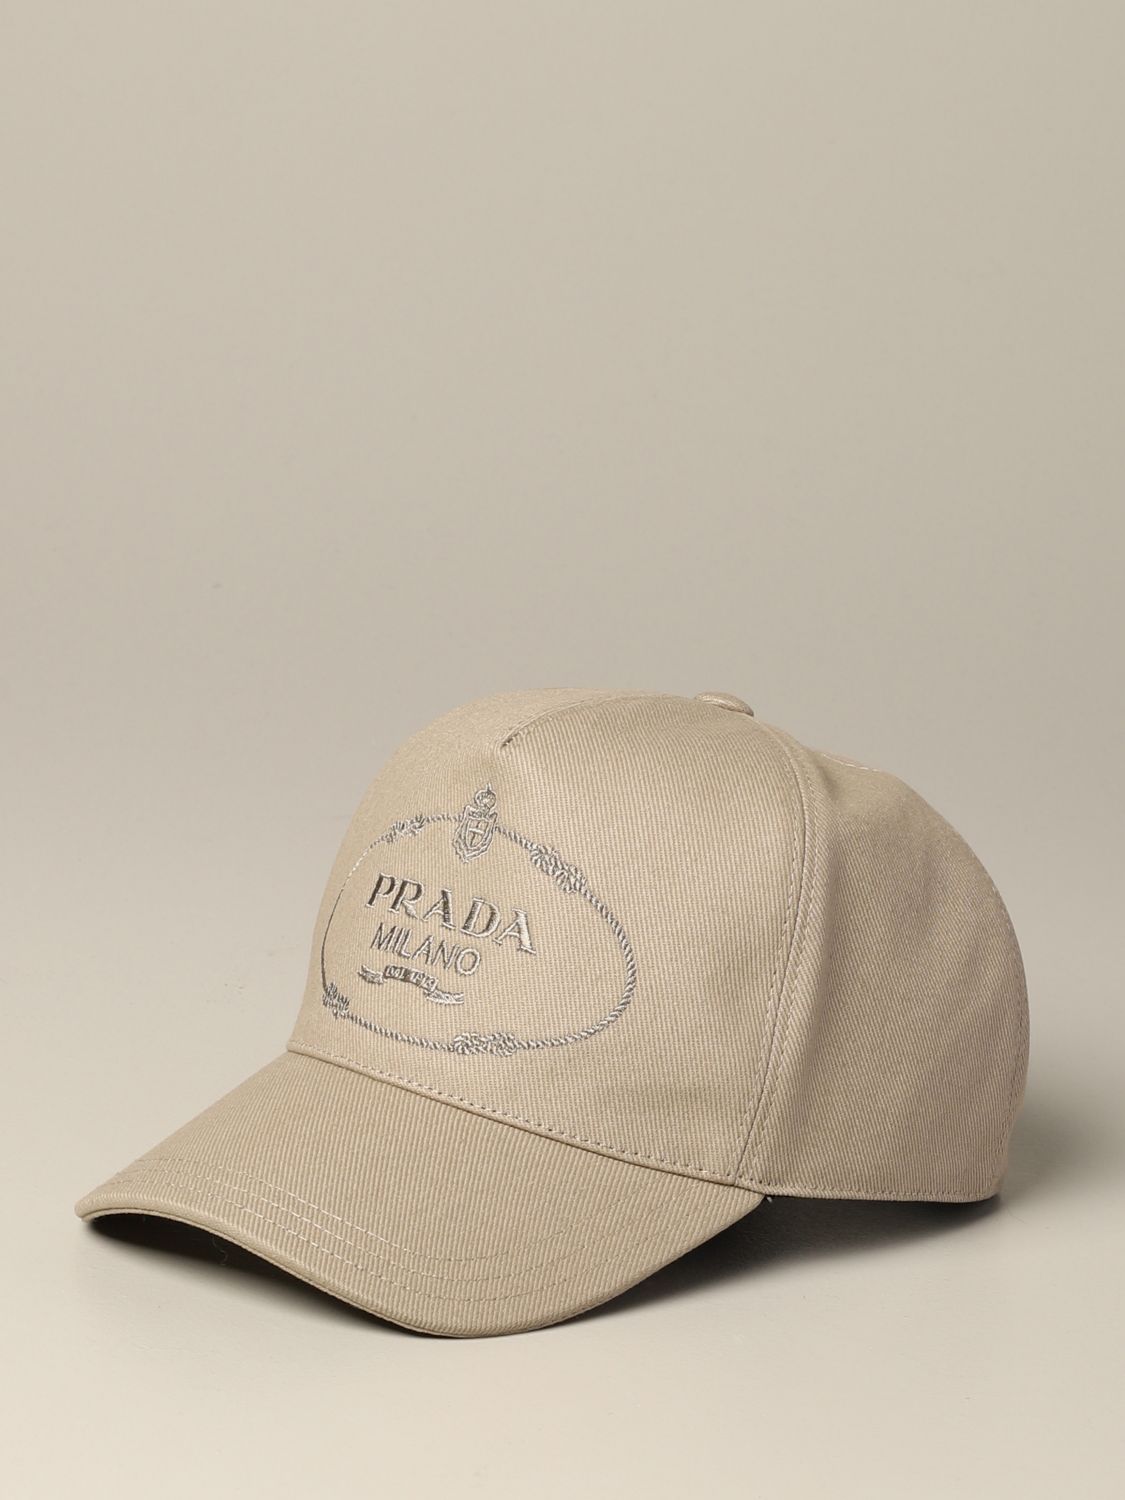 PRADA: hat with logo - Beige | Prada hat 2HC179 2DB1 online on GIGLIO.COM